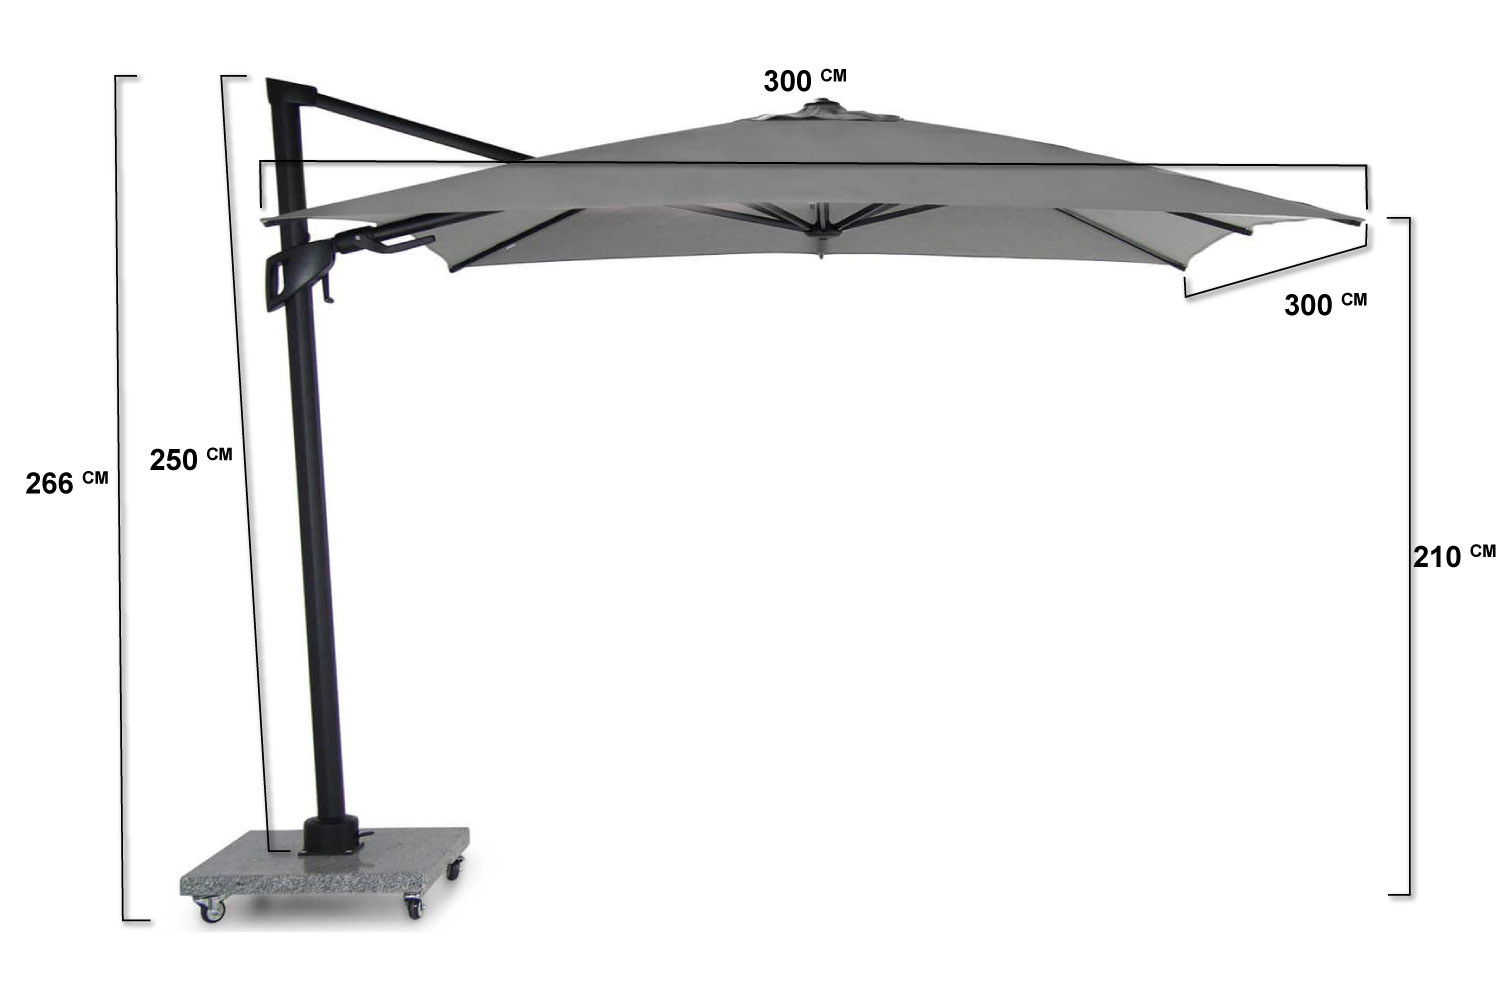 Santika Belize Deluxe parasol 300 cm x 300 cm antraciet frame/ mid grey